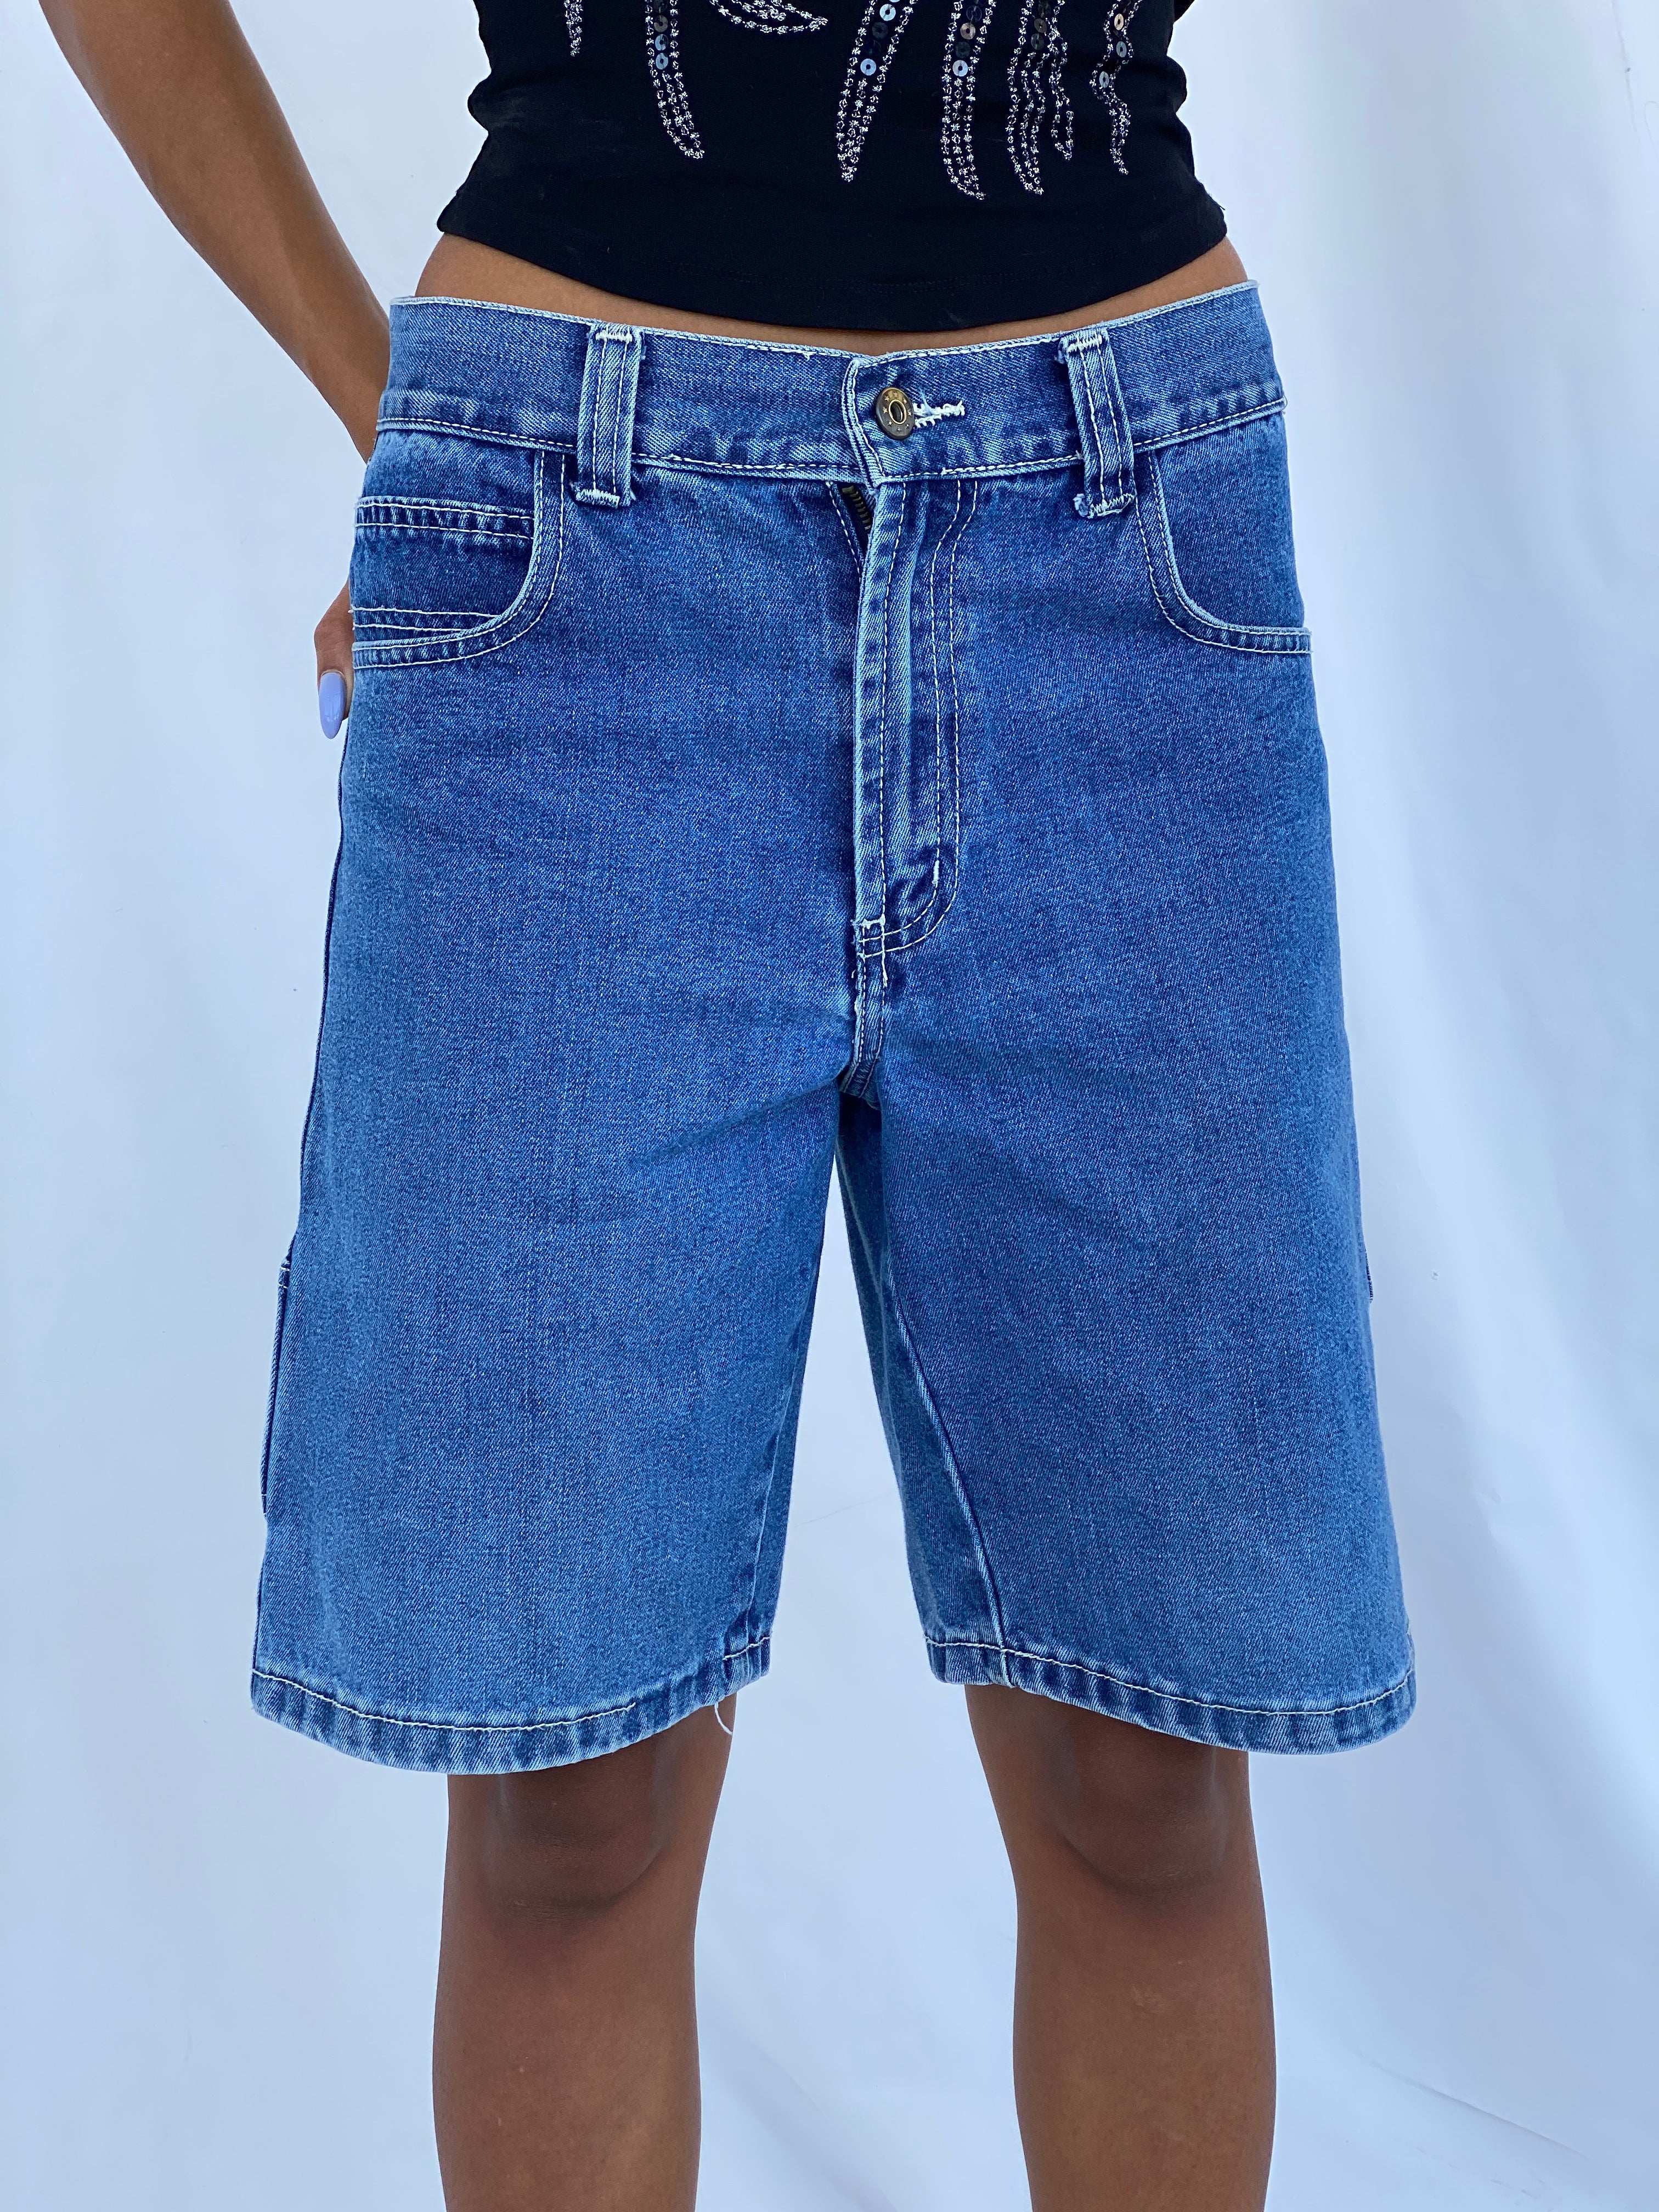 Vintage Carpenter Style Denim Shorts - Balagan Vintage Shorts 00s, 90s, NEW IN, shorts, summer, Tojan